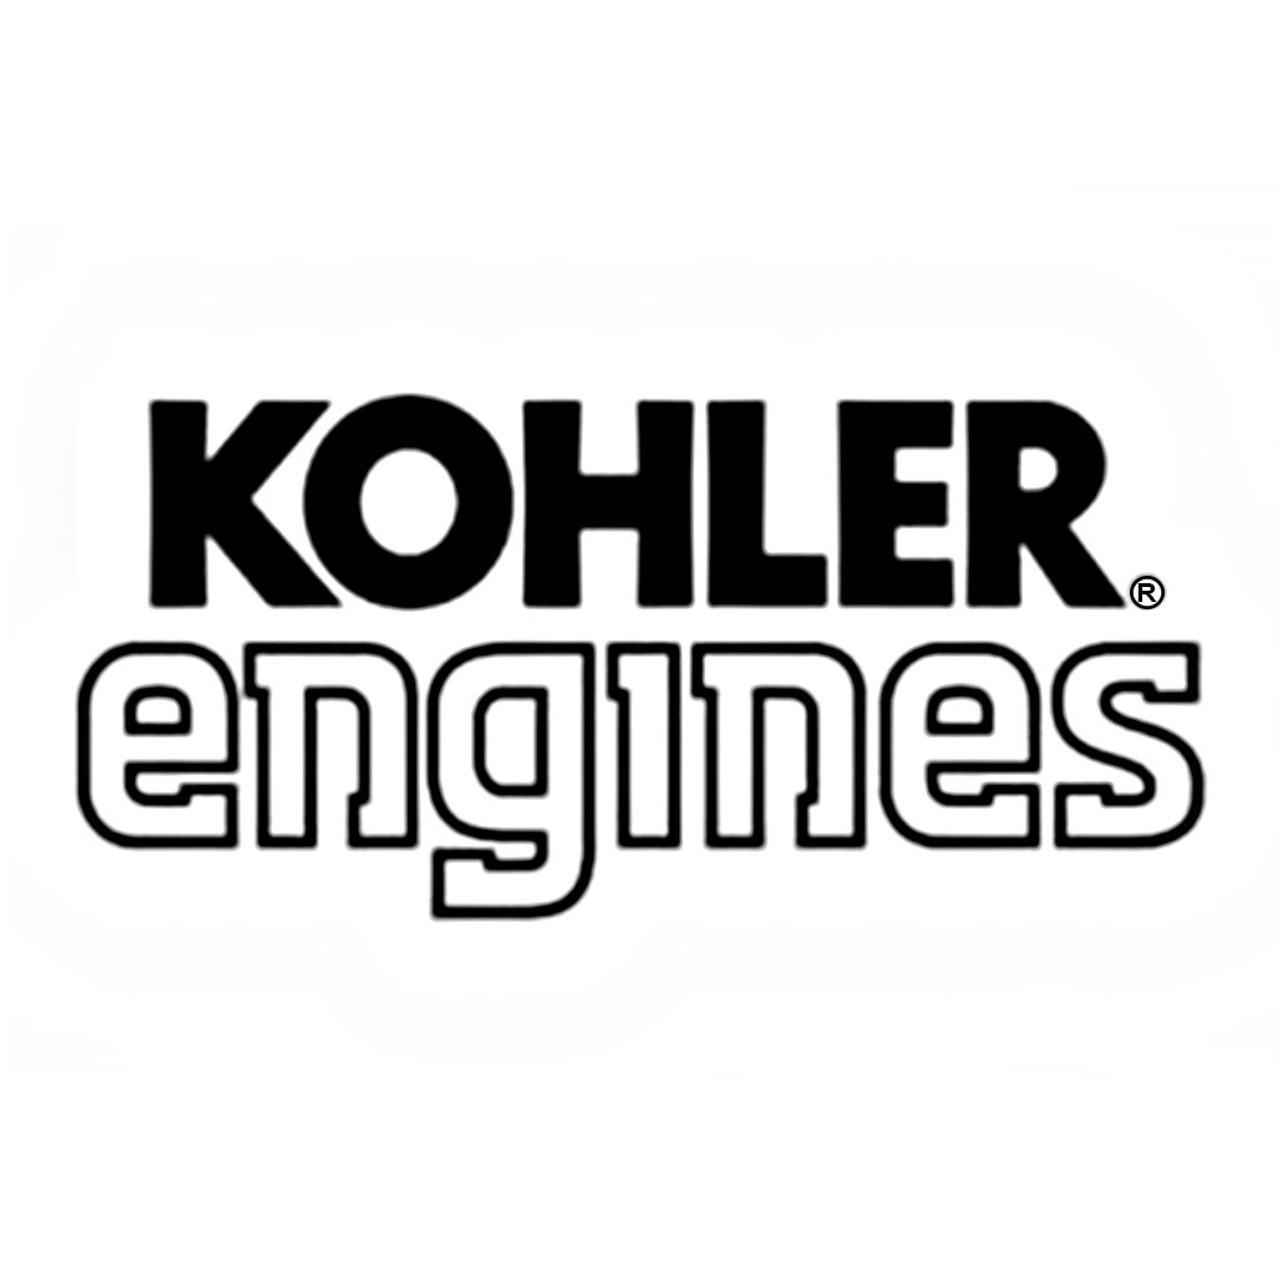 Kohler Manual Aegis Lh 630-775 66 690 04